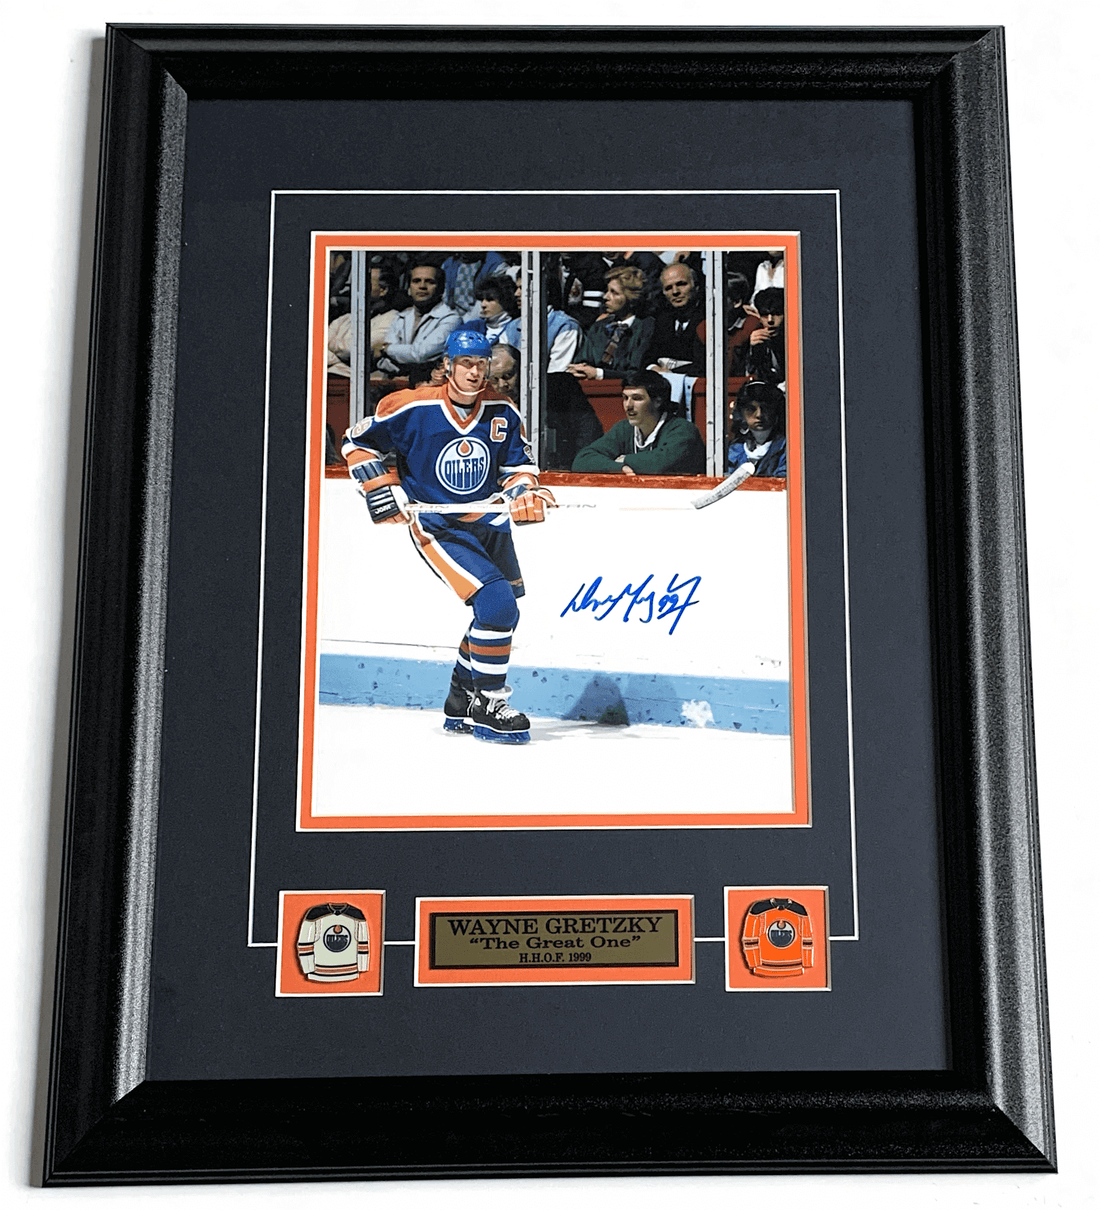 Wayne Gretzky Signature Edmonton Oilers Framed Hockey Memorabilia. Accompanied with a Certificate of Authentication.